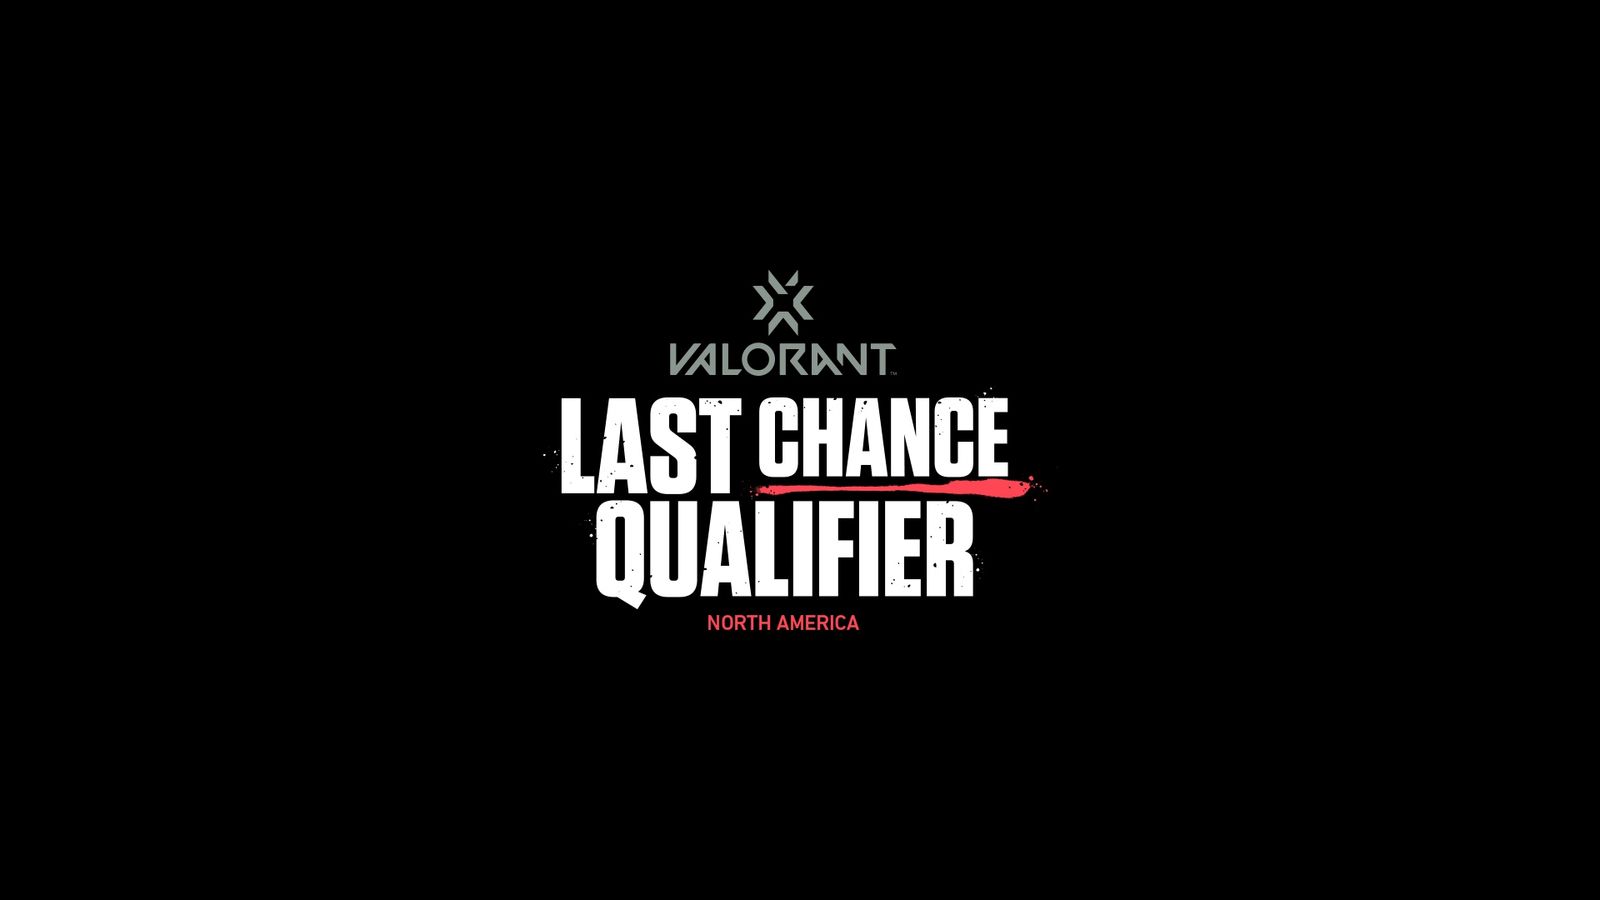 Last Chance Qualifier for North America, Valorant